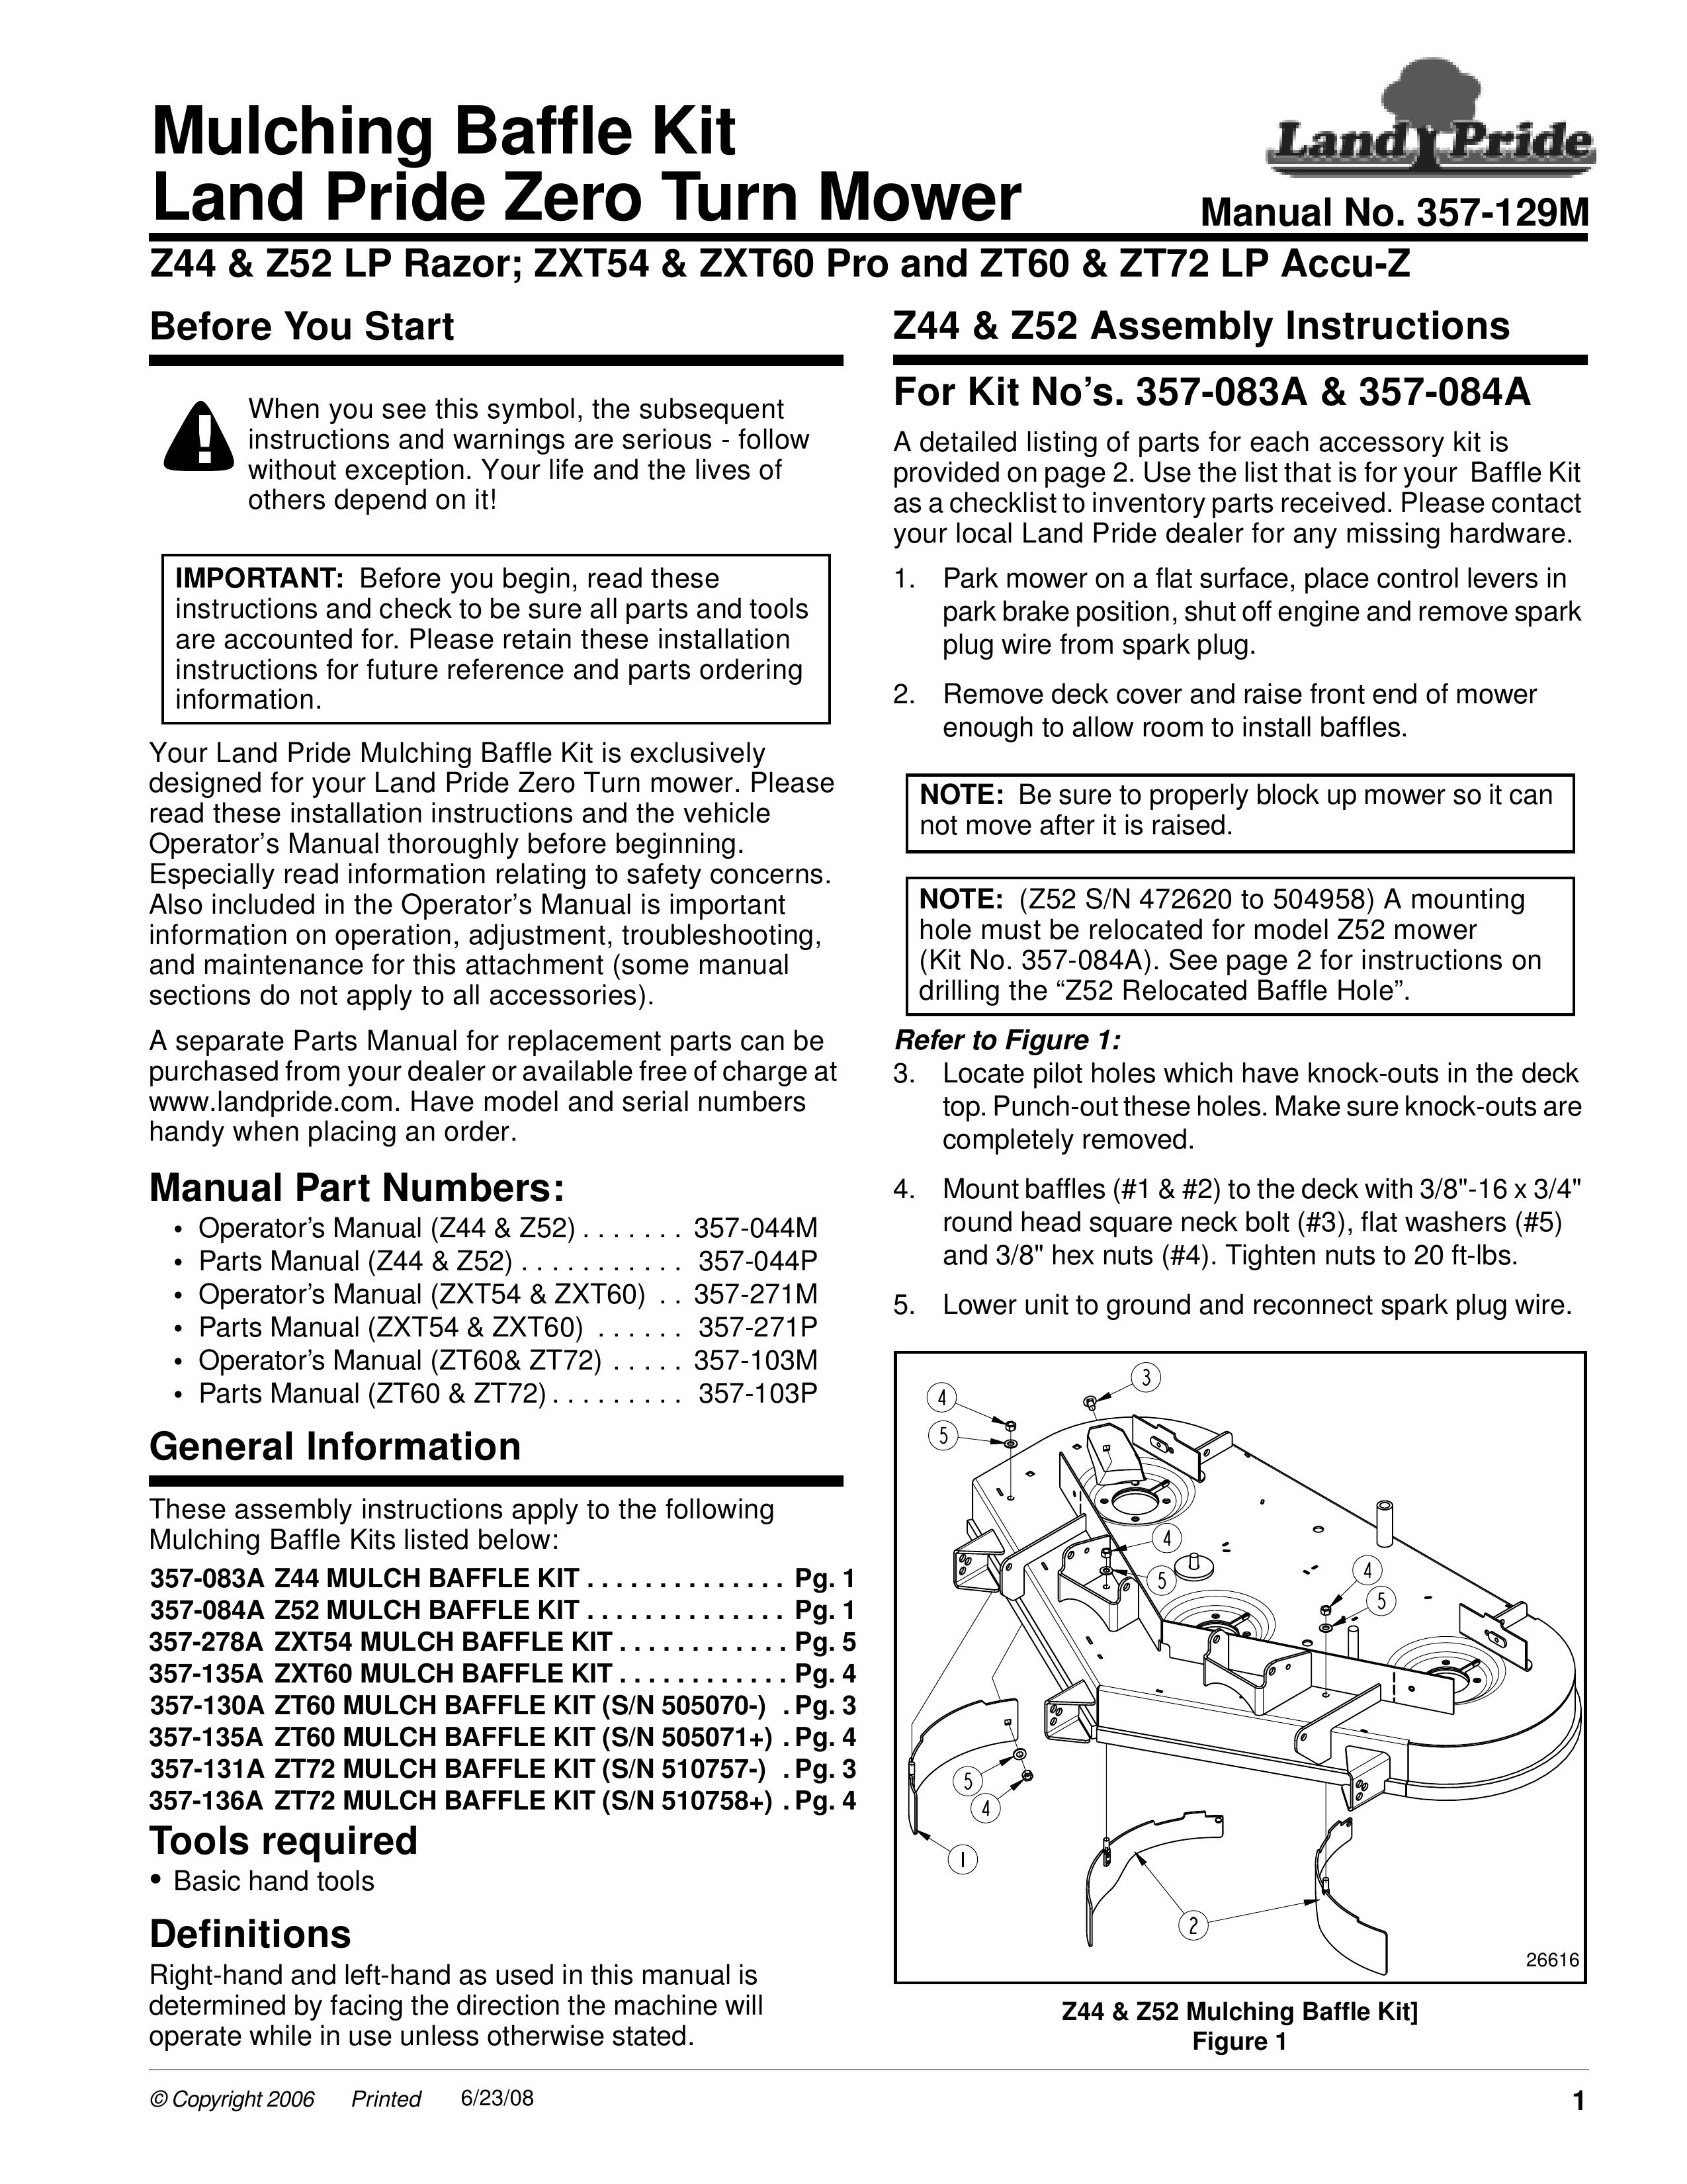 Land Pride 357-136A ZT72 Lawn Mower User Manual